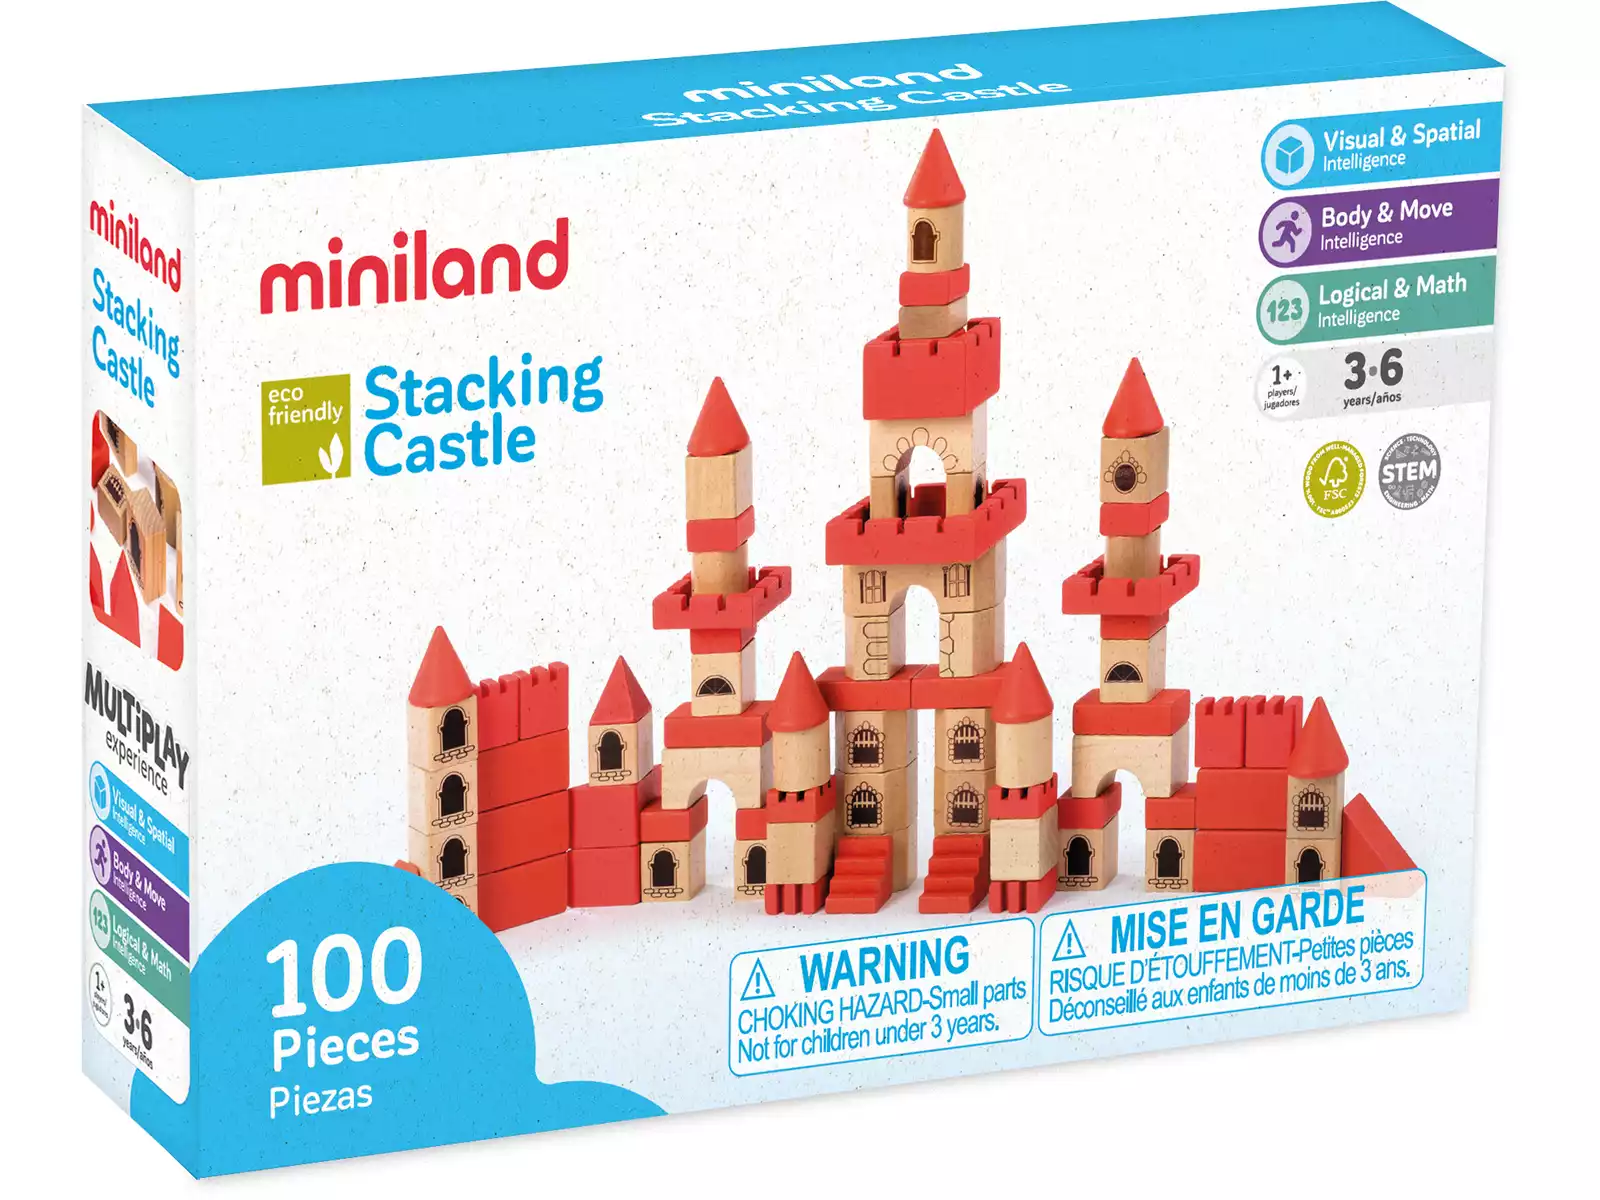  Miniland 95100 A4 LIGHTPAD : Toys & Games